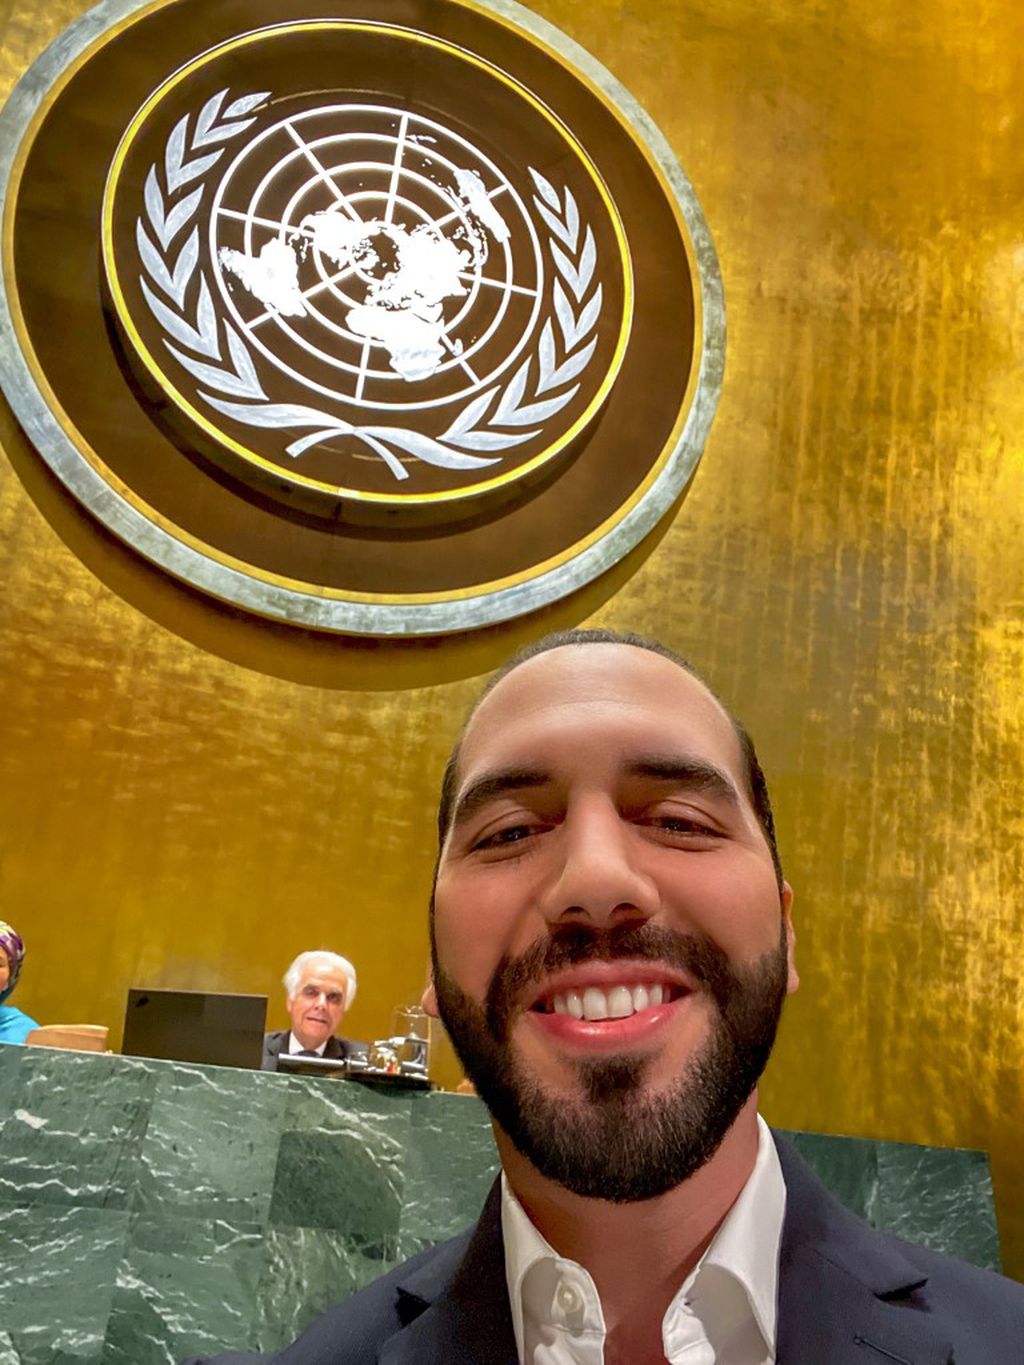 Predsjednik El Salvadora prije govora u UN-u opalio selfie (Foto: AFP)